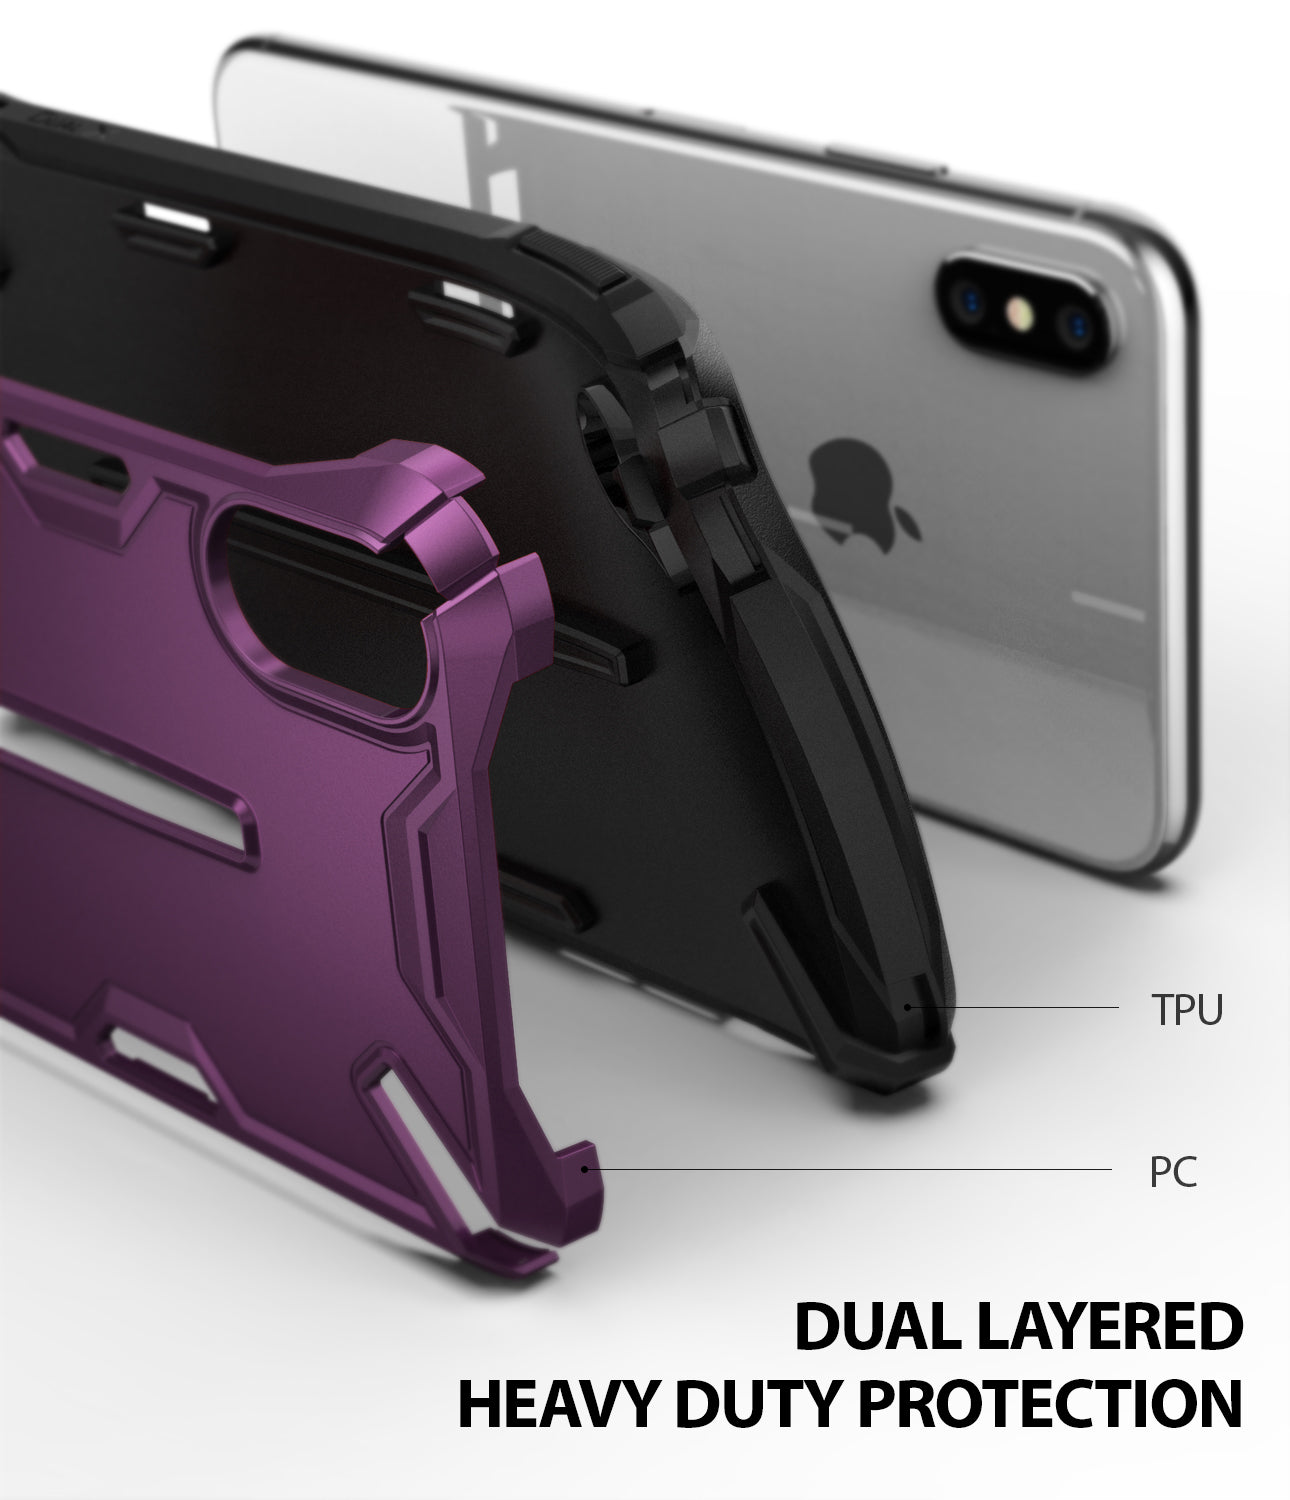 iPhone XS Case | Dual-X [DX]